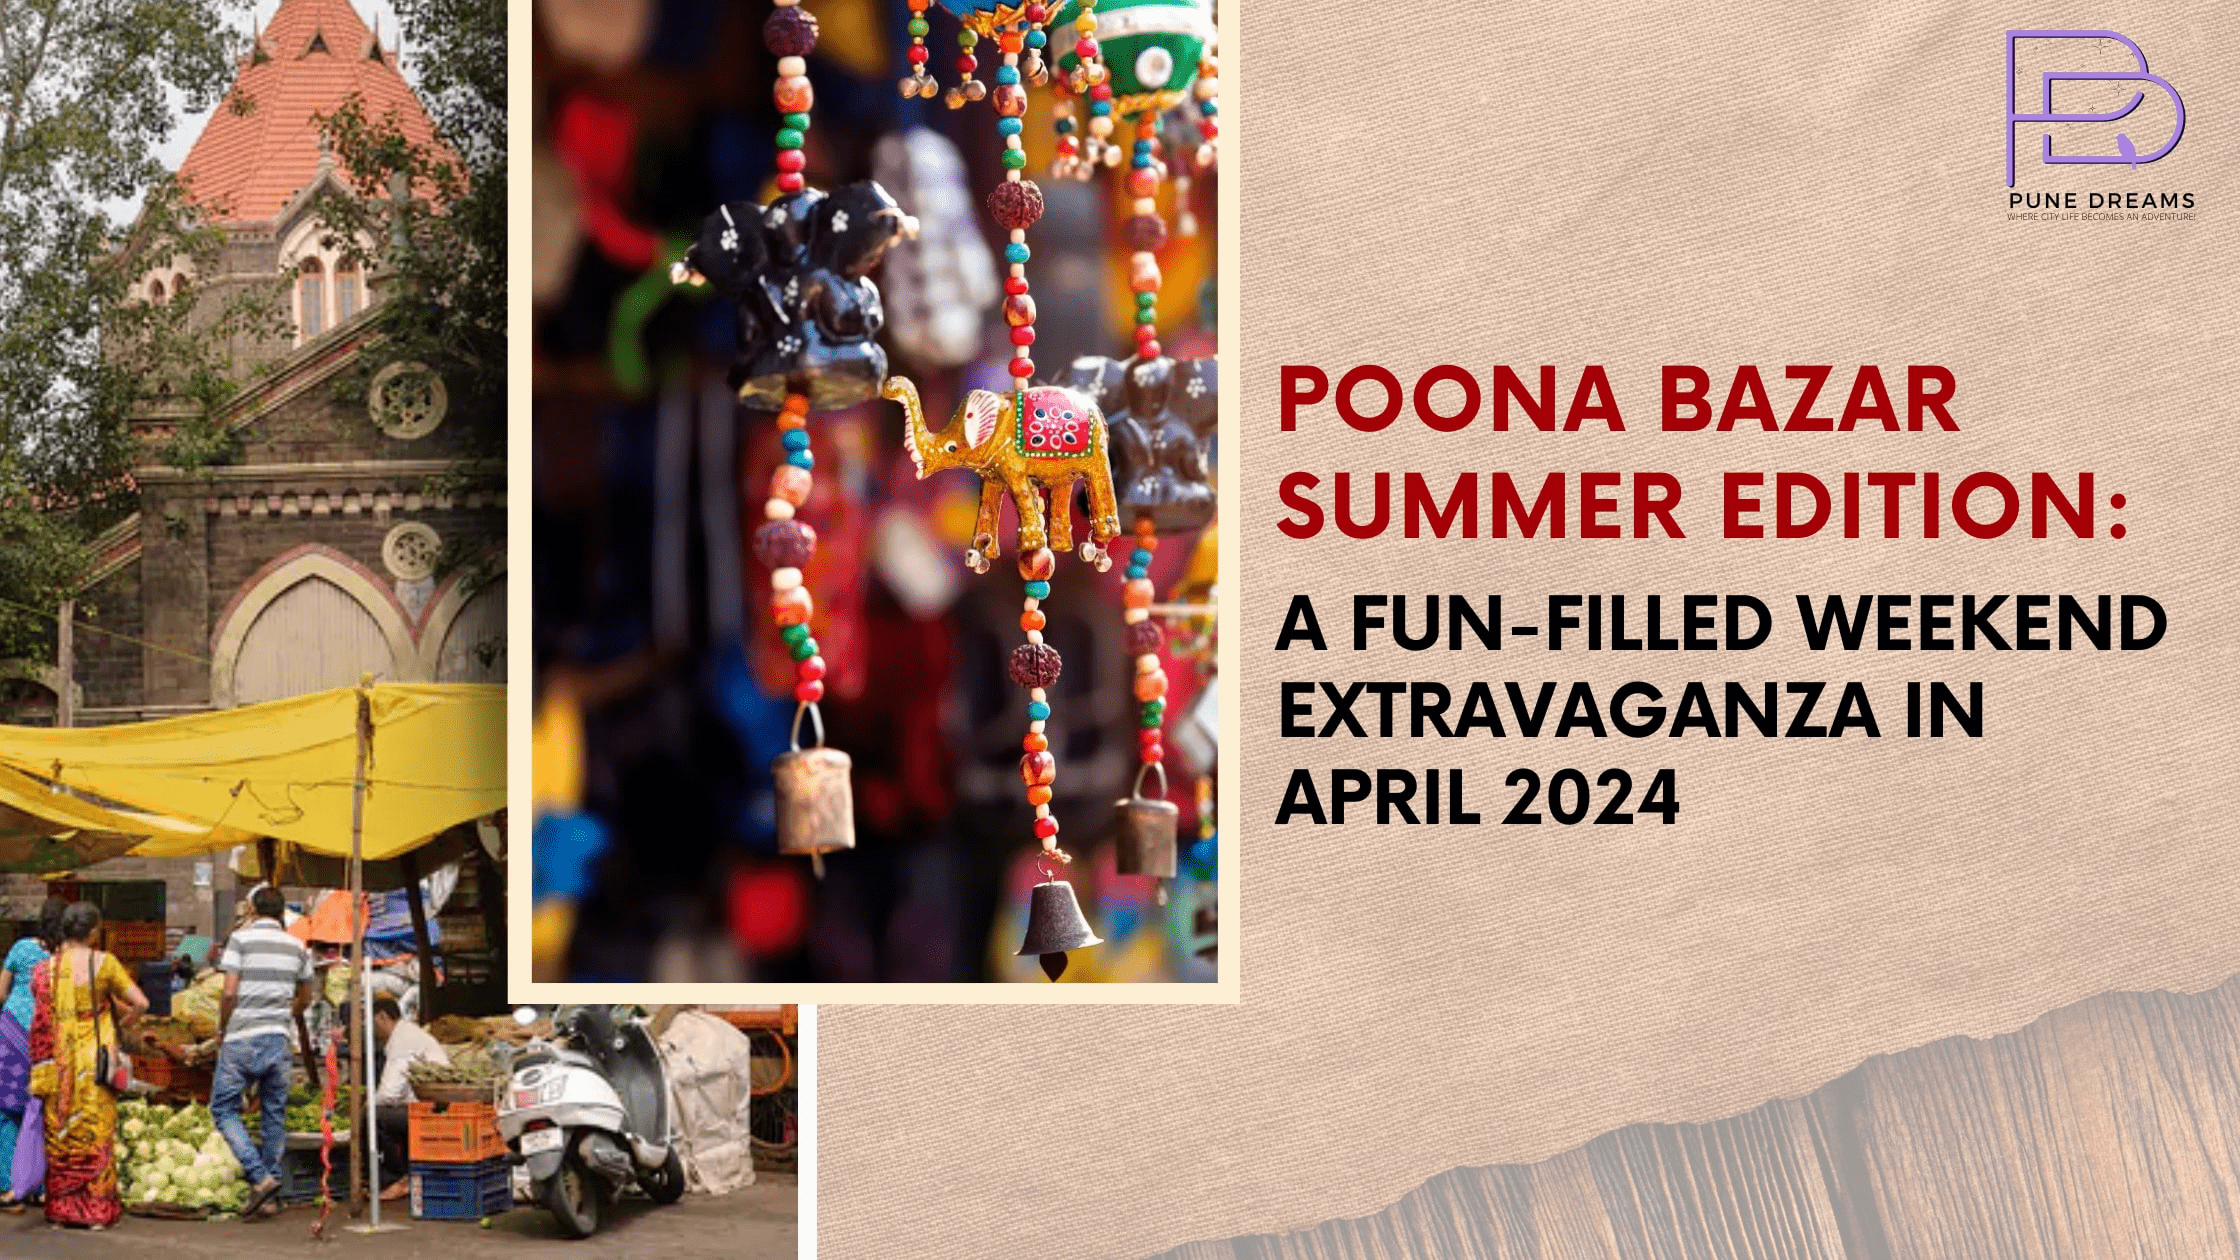 Poona Bazar Summer Edition: A Fun-Filled Weekend Extravaganza in April 2024